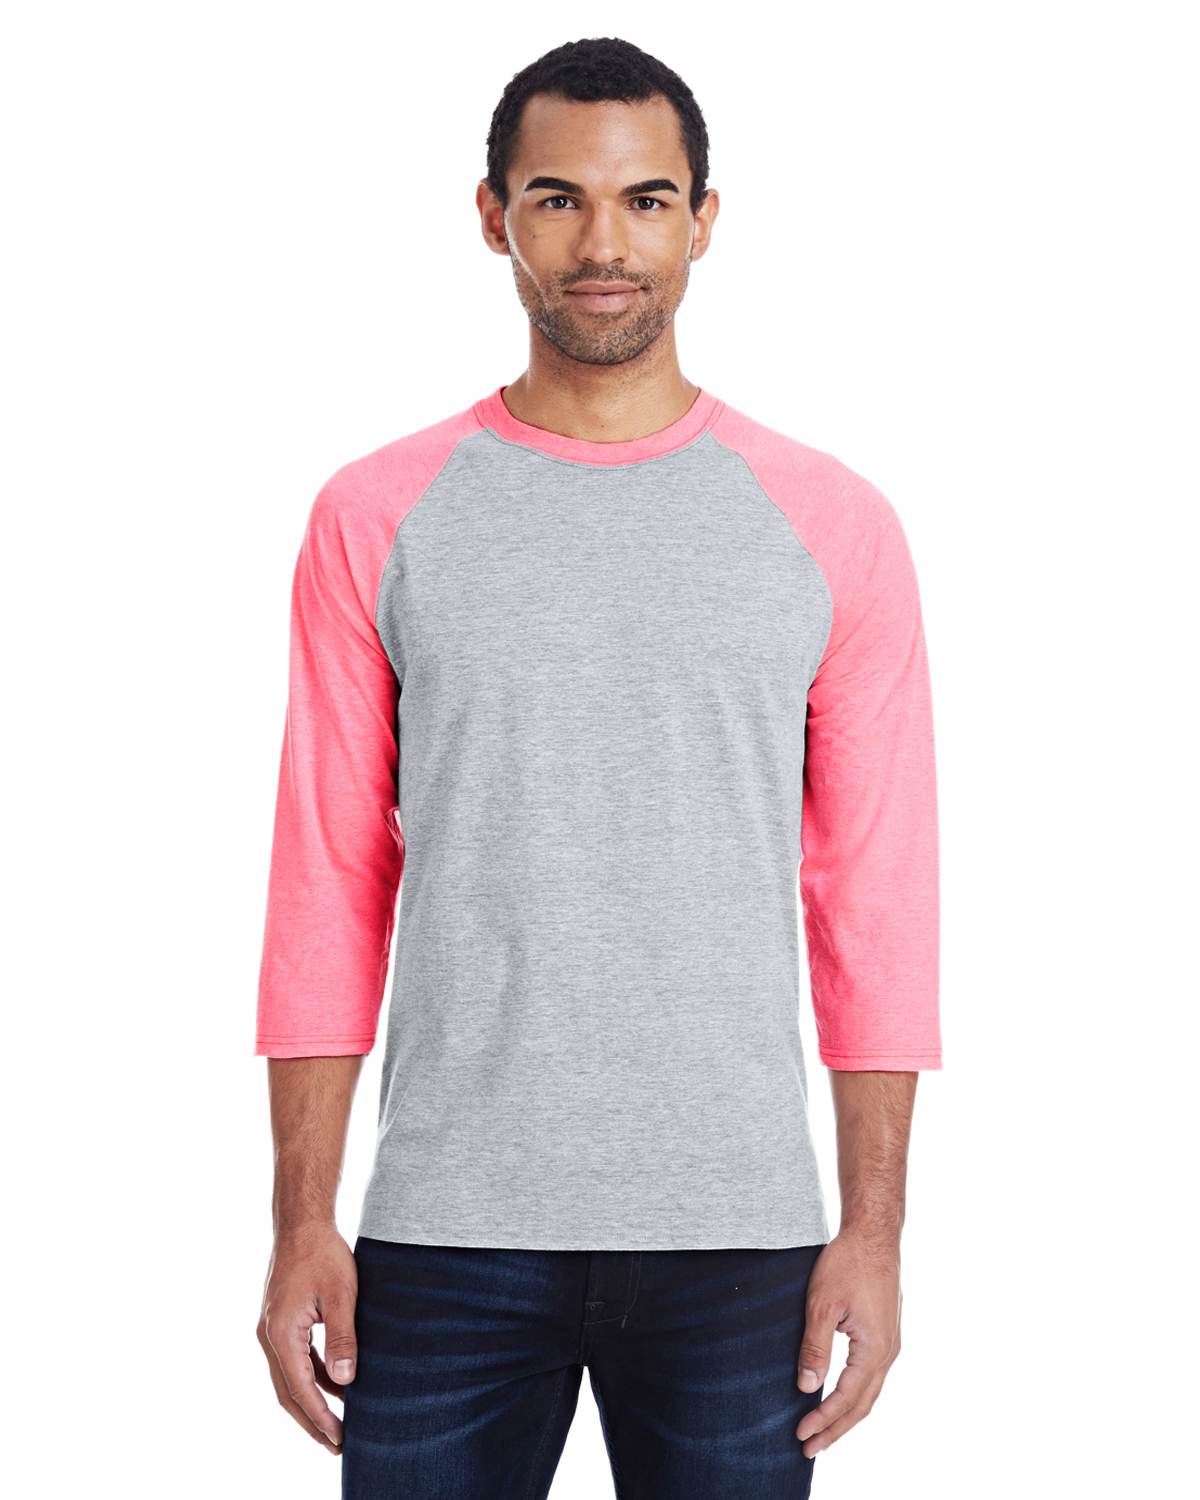 Hanes Men’s 4.5 oz., 60/40 Ringspun Cotton/Polyester X-Temp® Baseball T-Shirt